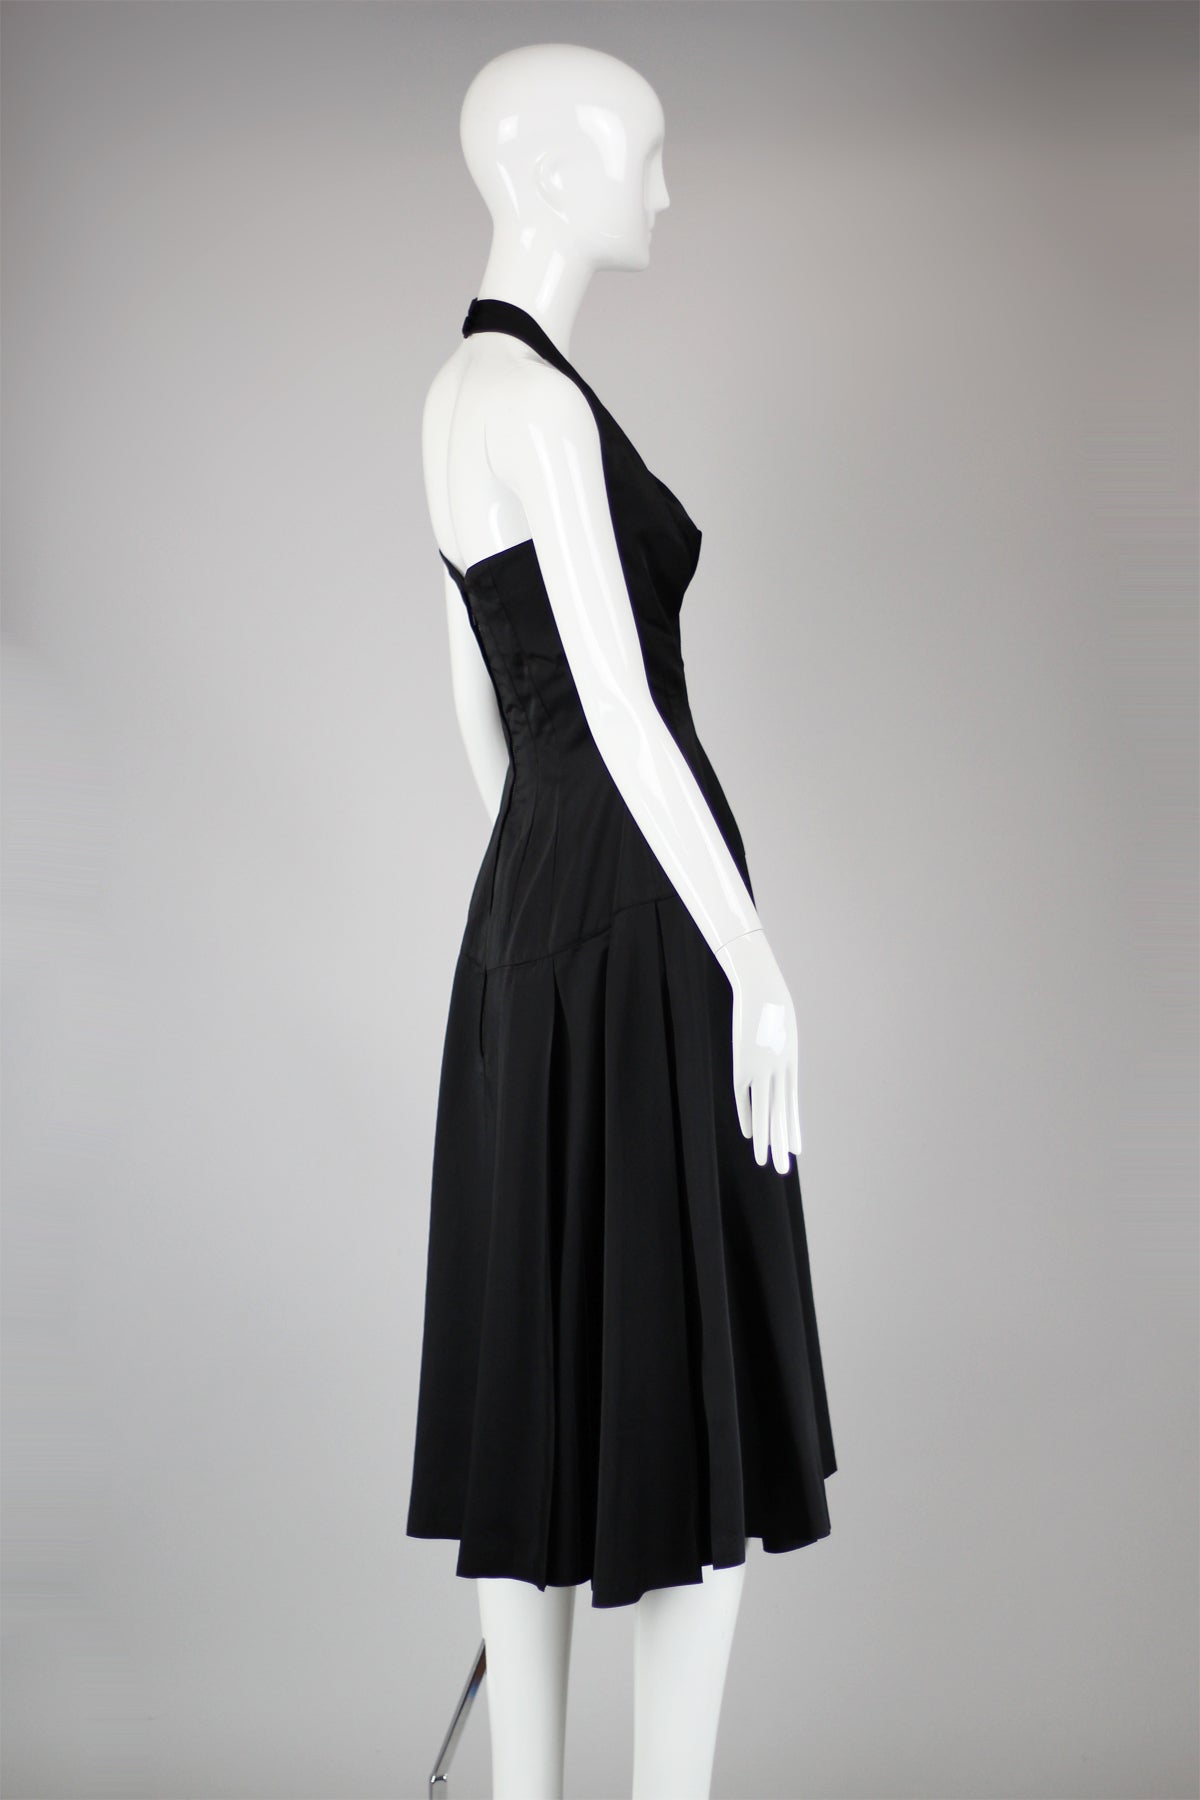 RESERVED For Tammara- Rare 1950s Lilli Ann Black Satin Halter Dress